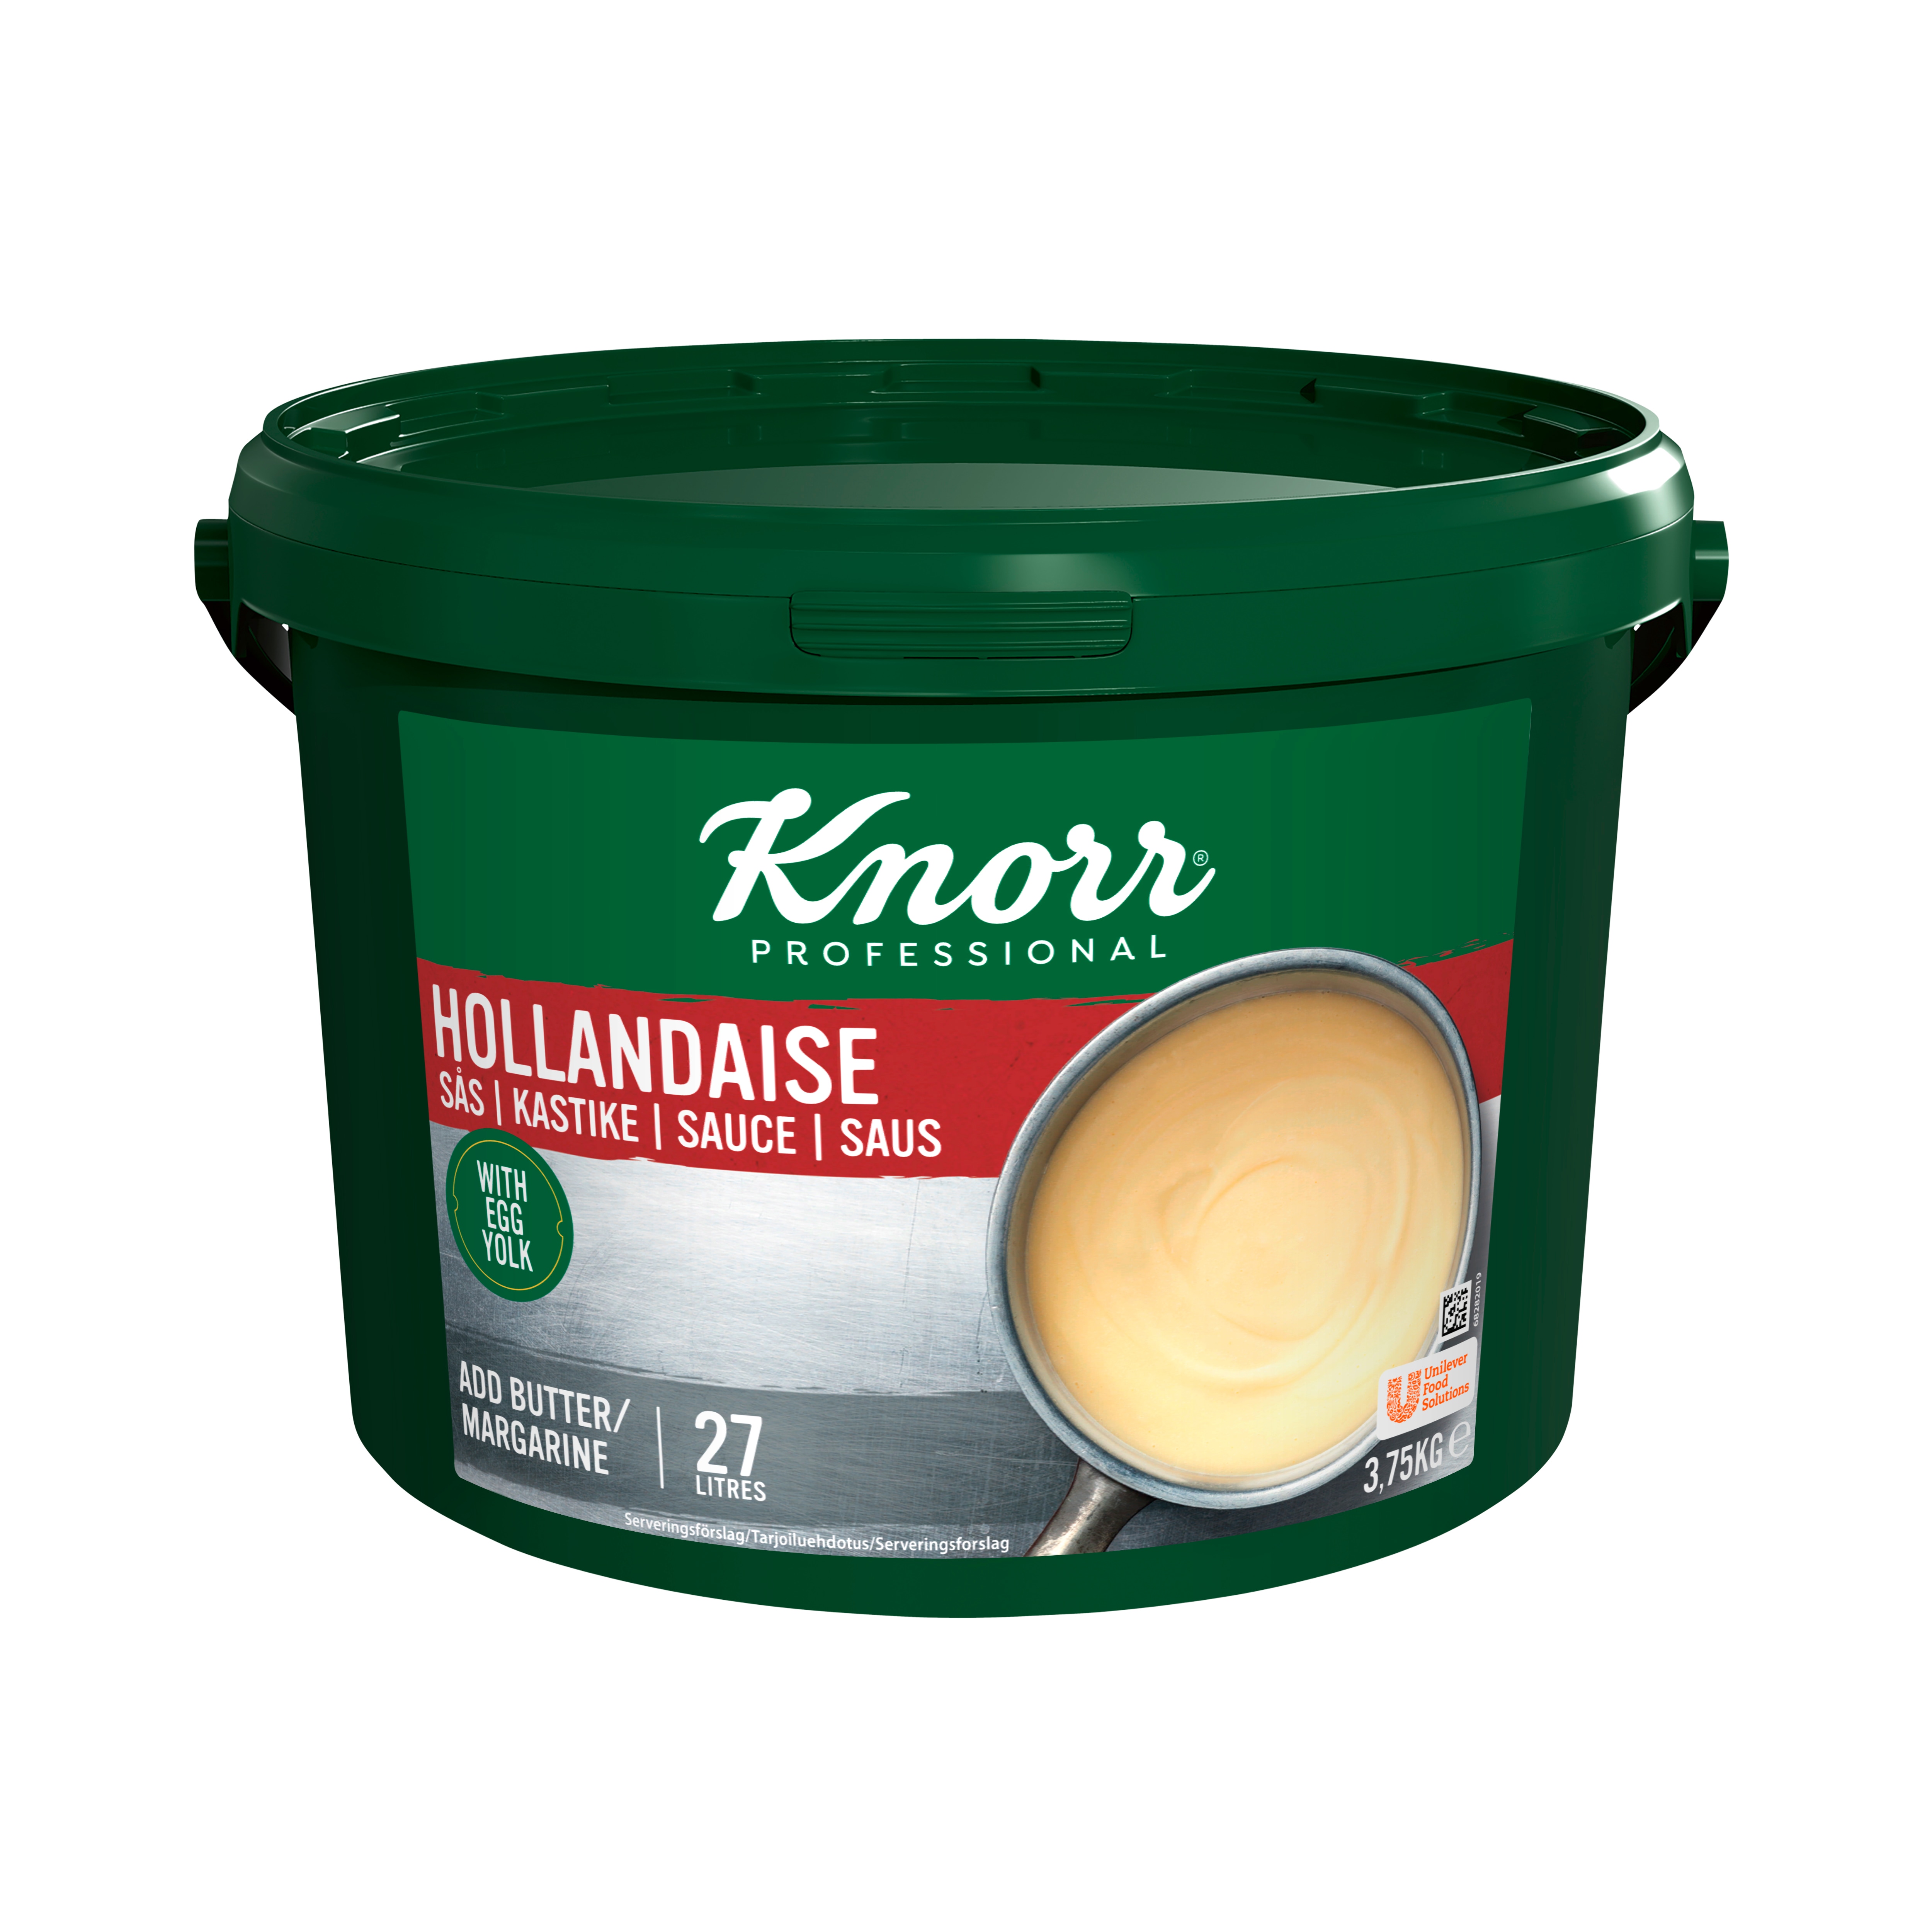 Knorr Hollandaisekastike 3,75 kg / 27 L - 